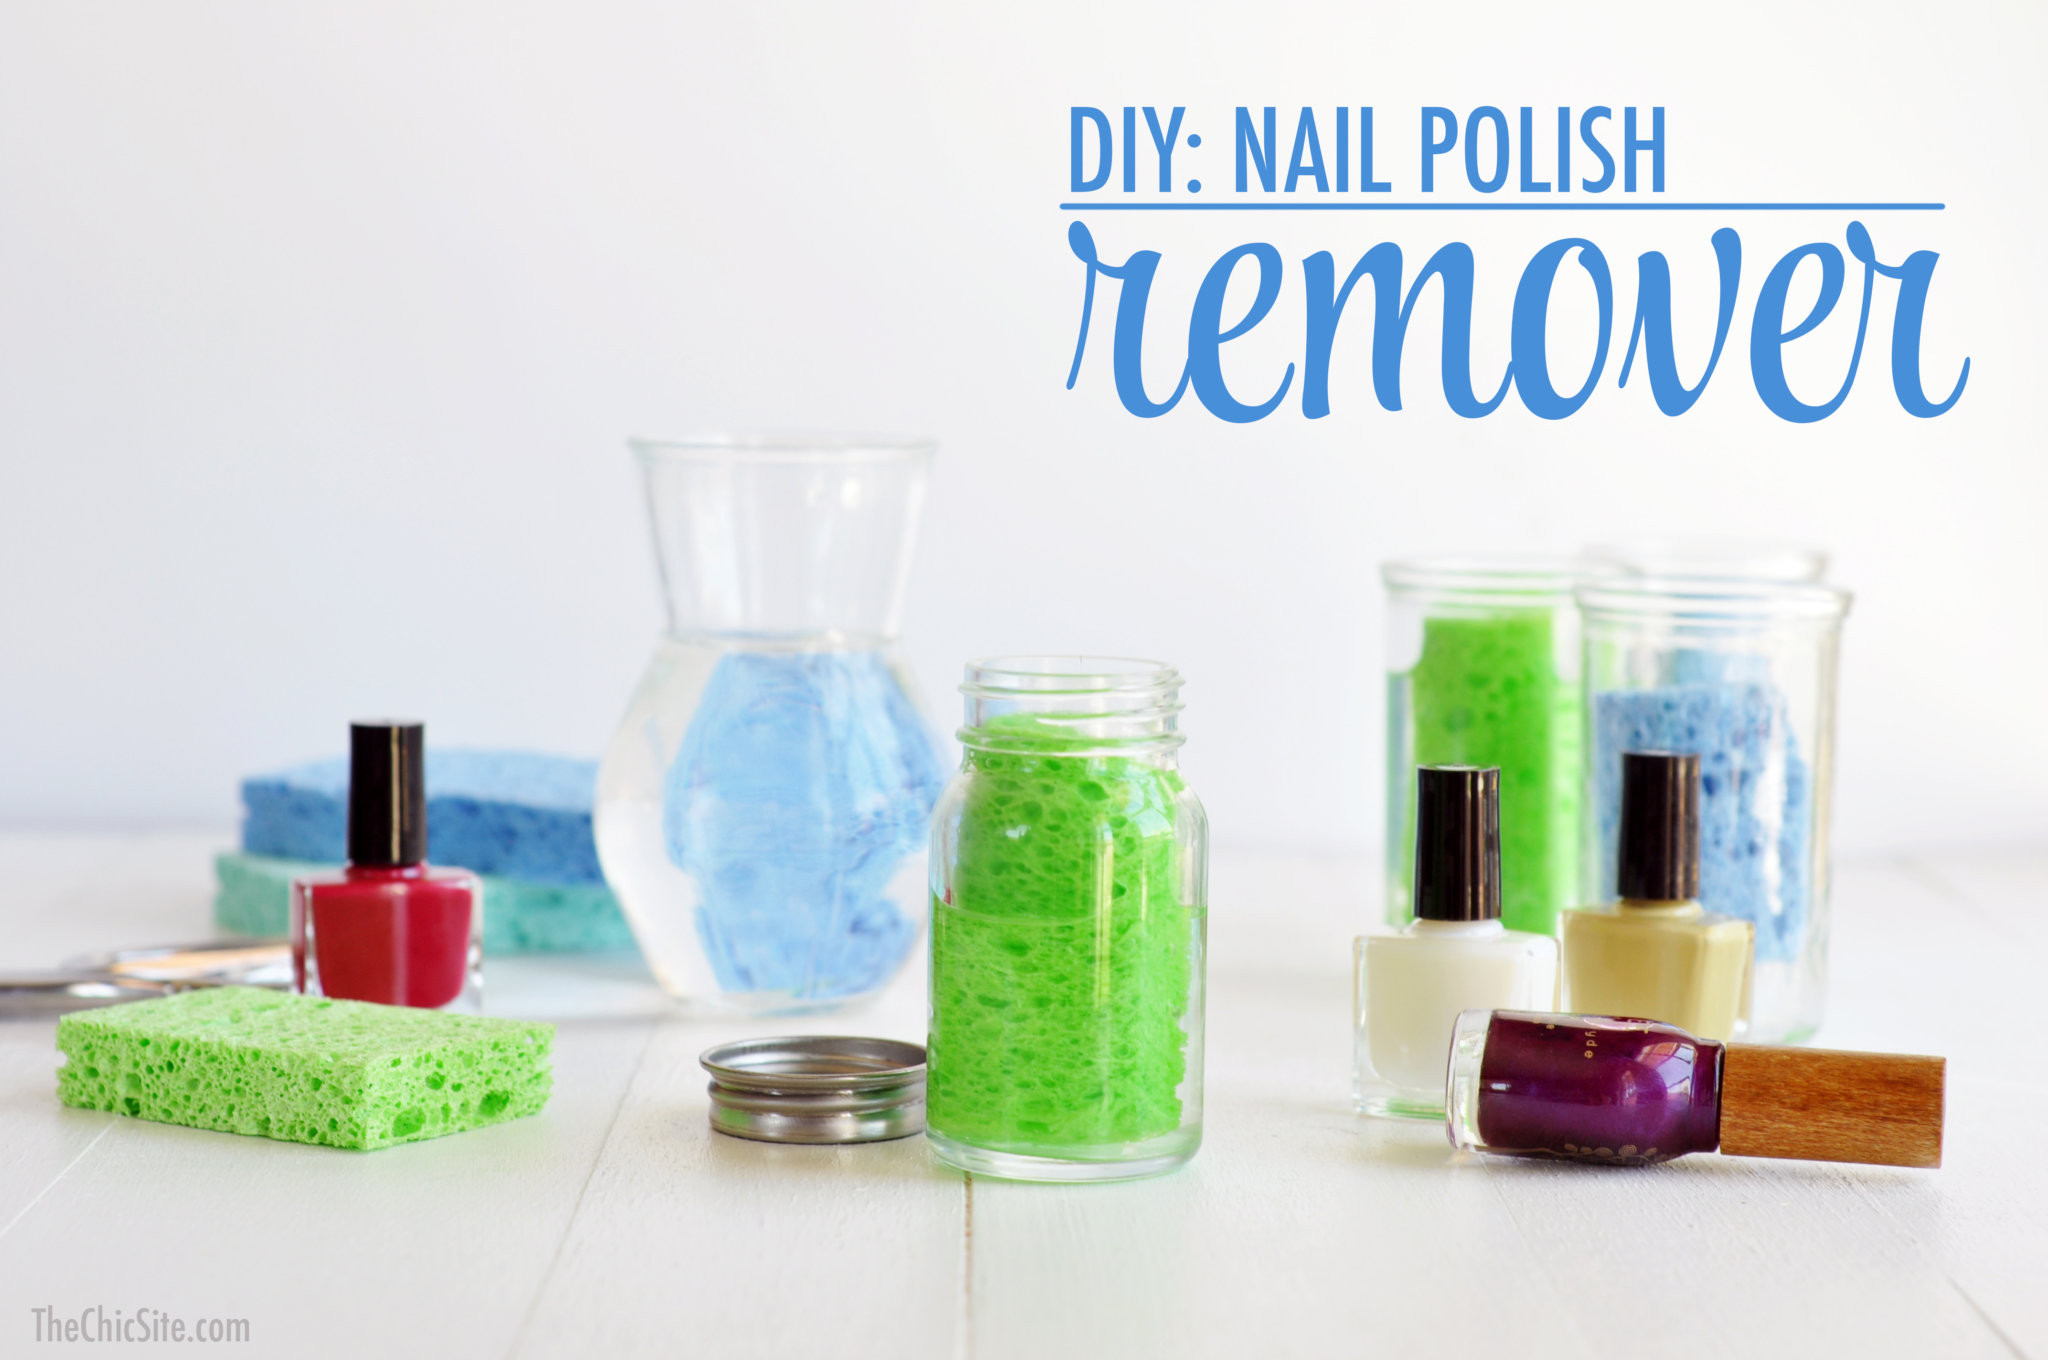 Best ideas about DIY Nail Polish
. Save or Pin DIY Nail Polish Remover Now.